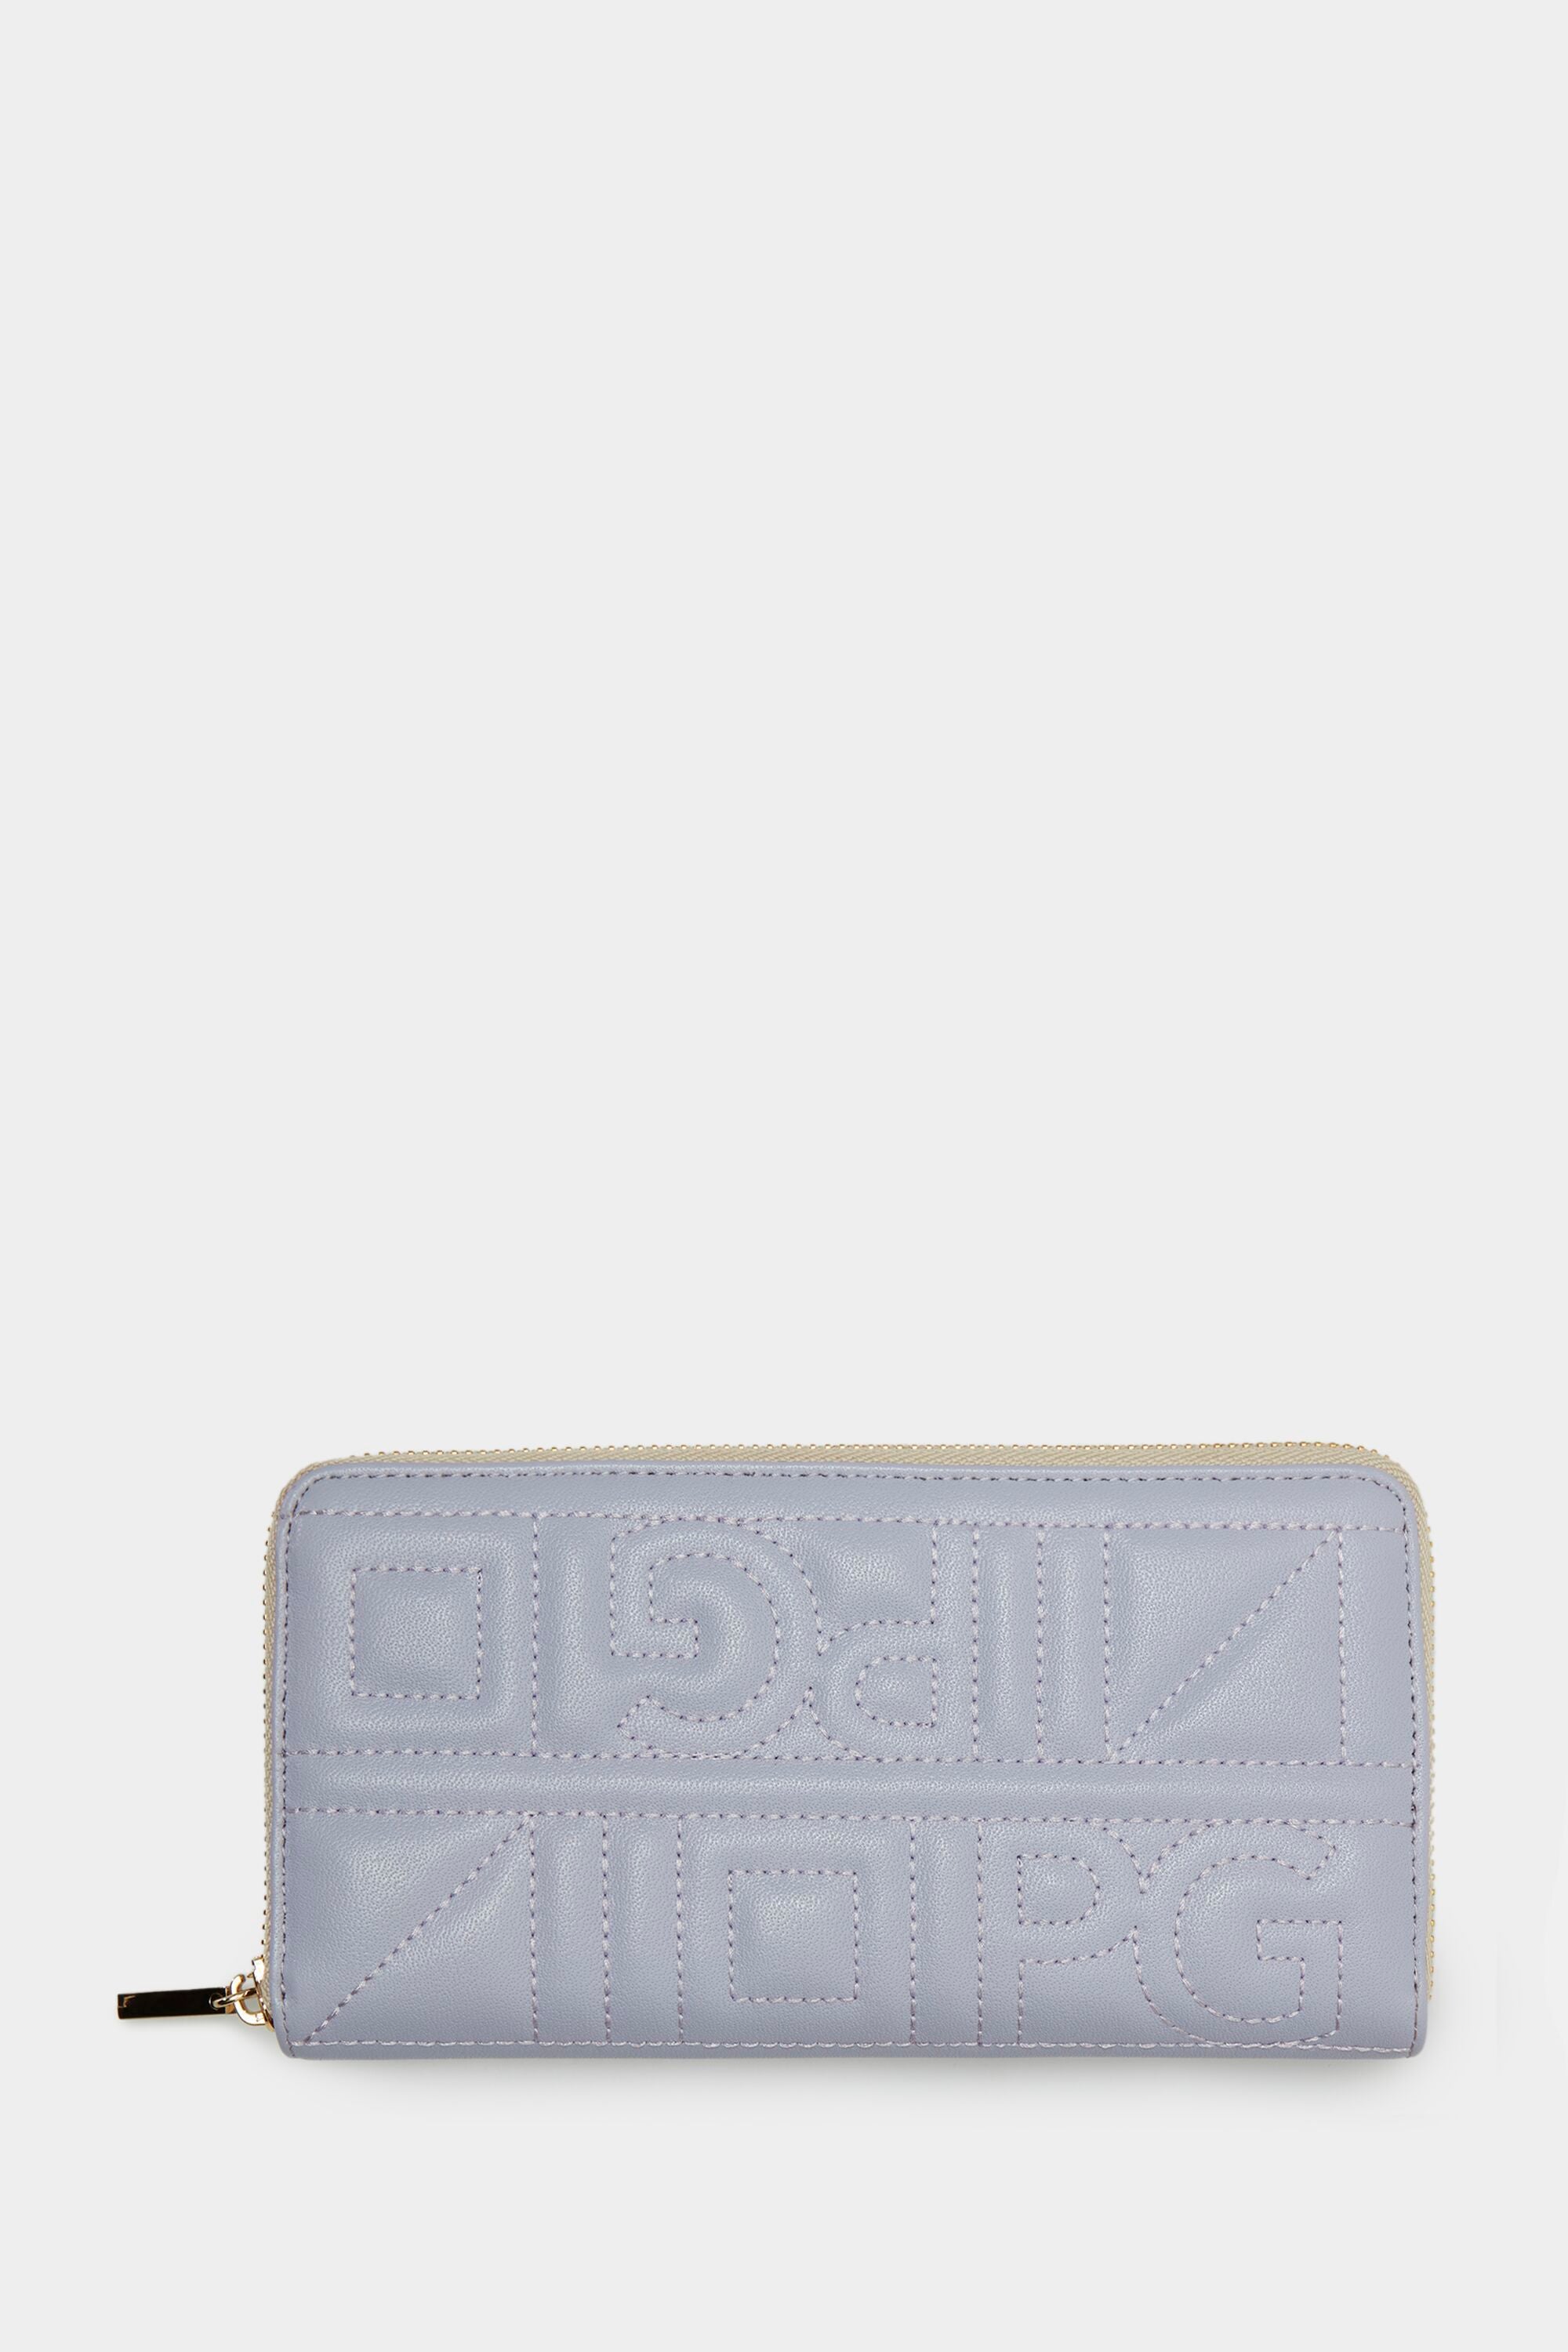 PG tape zipped American wallet